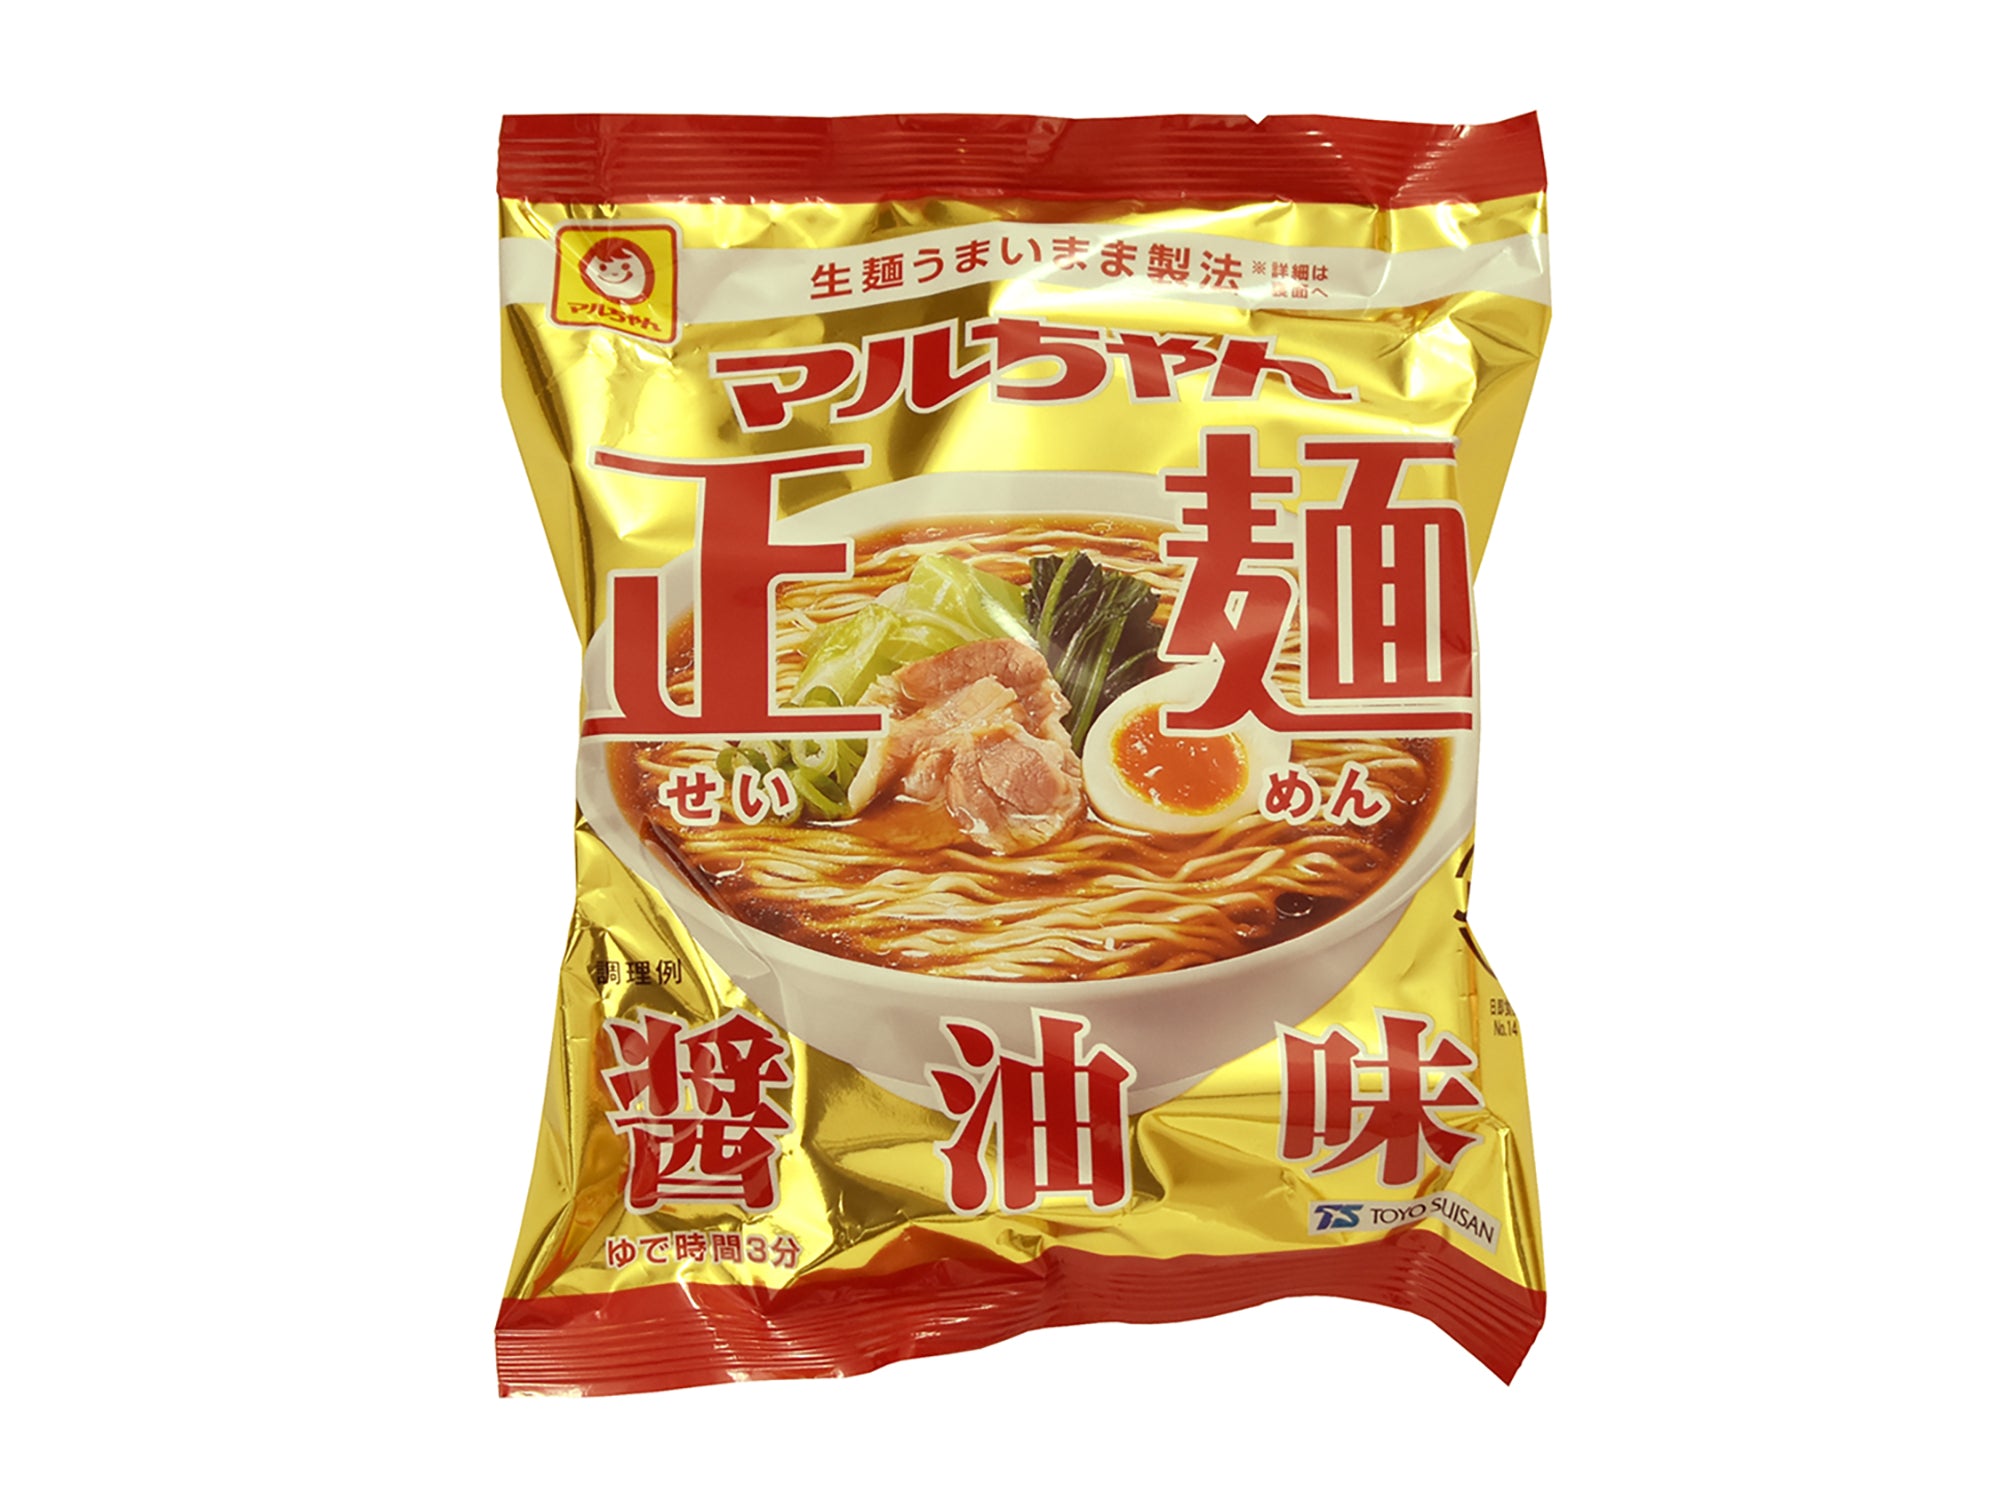 Maruchan Seimen Shoyu Flavor Review: This Ramen Will Become Your Next Favorite